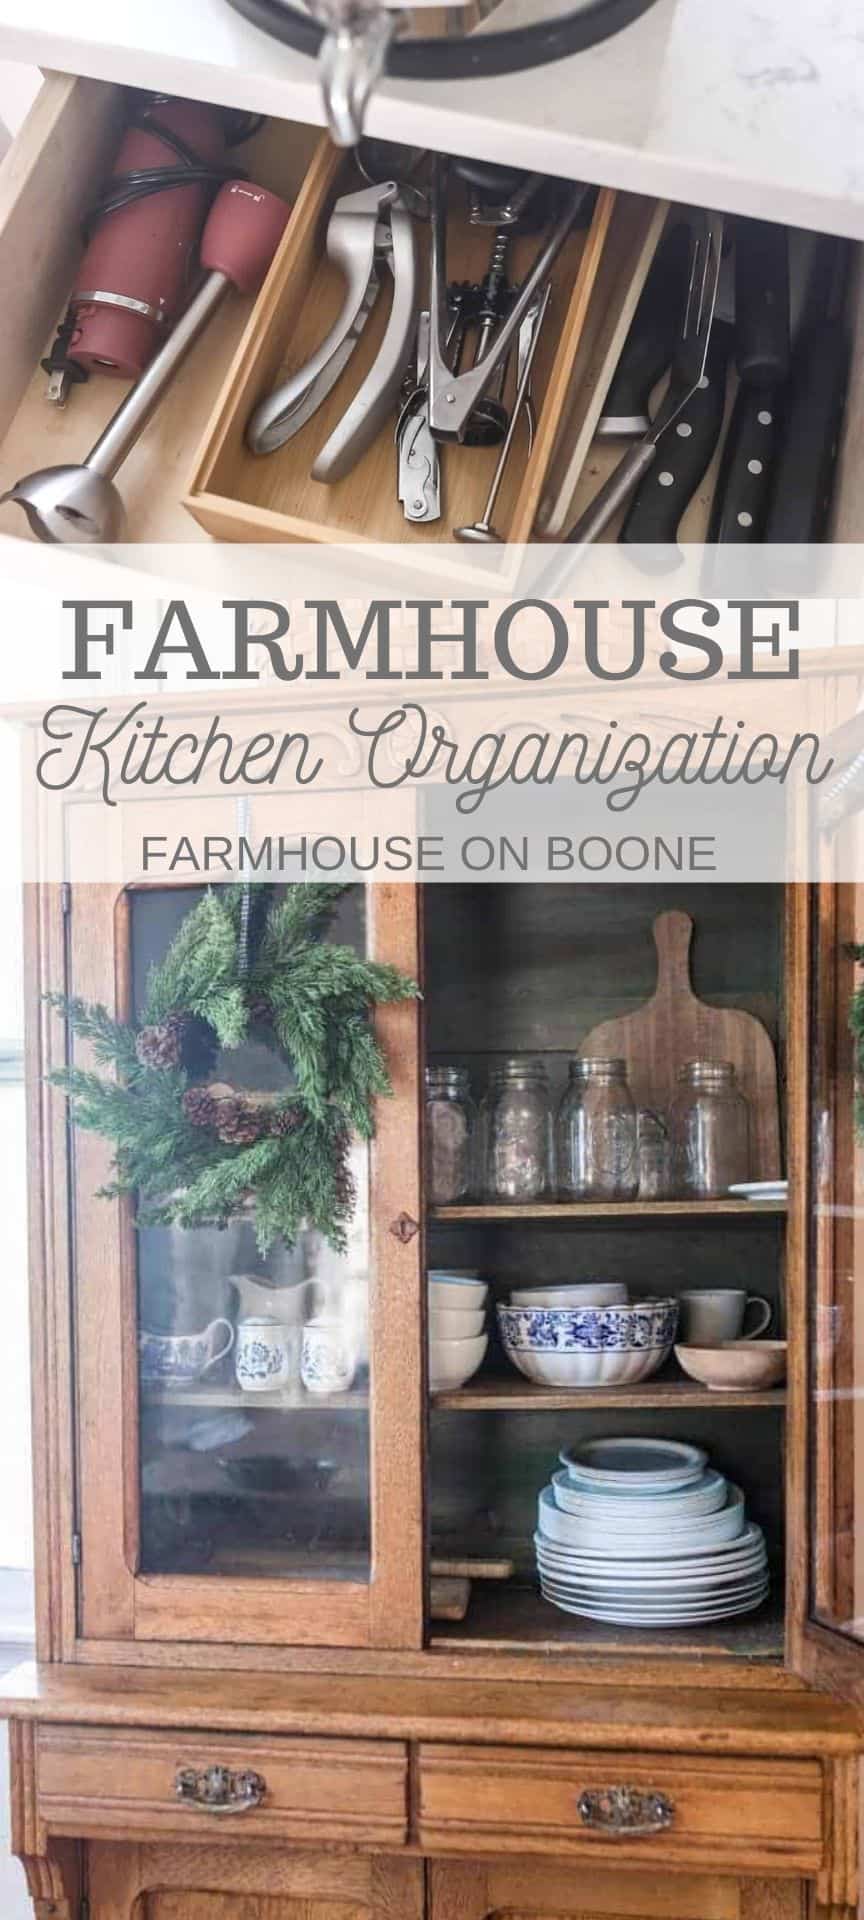 Farmhouse Kitchen Decor Project Roundup - Organized Clutter